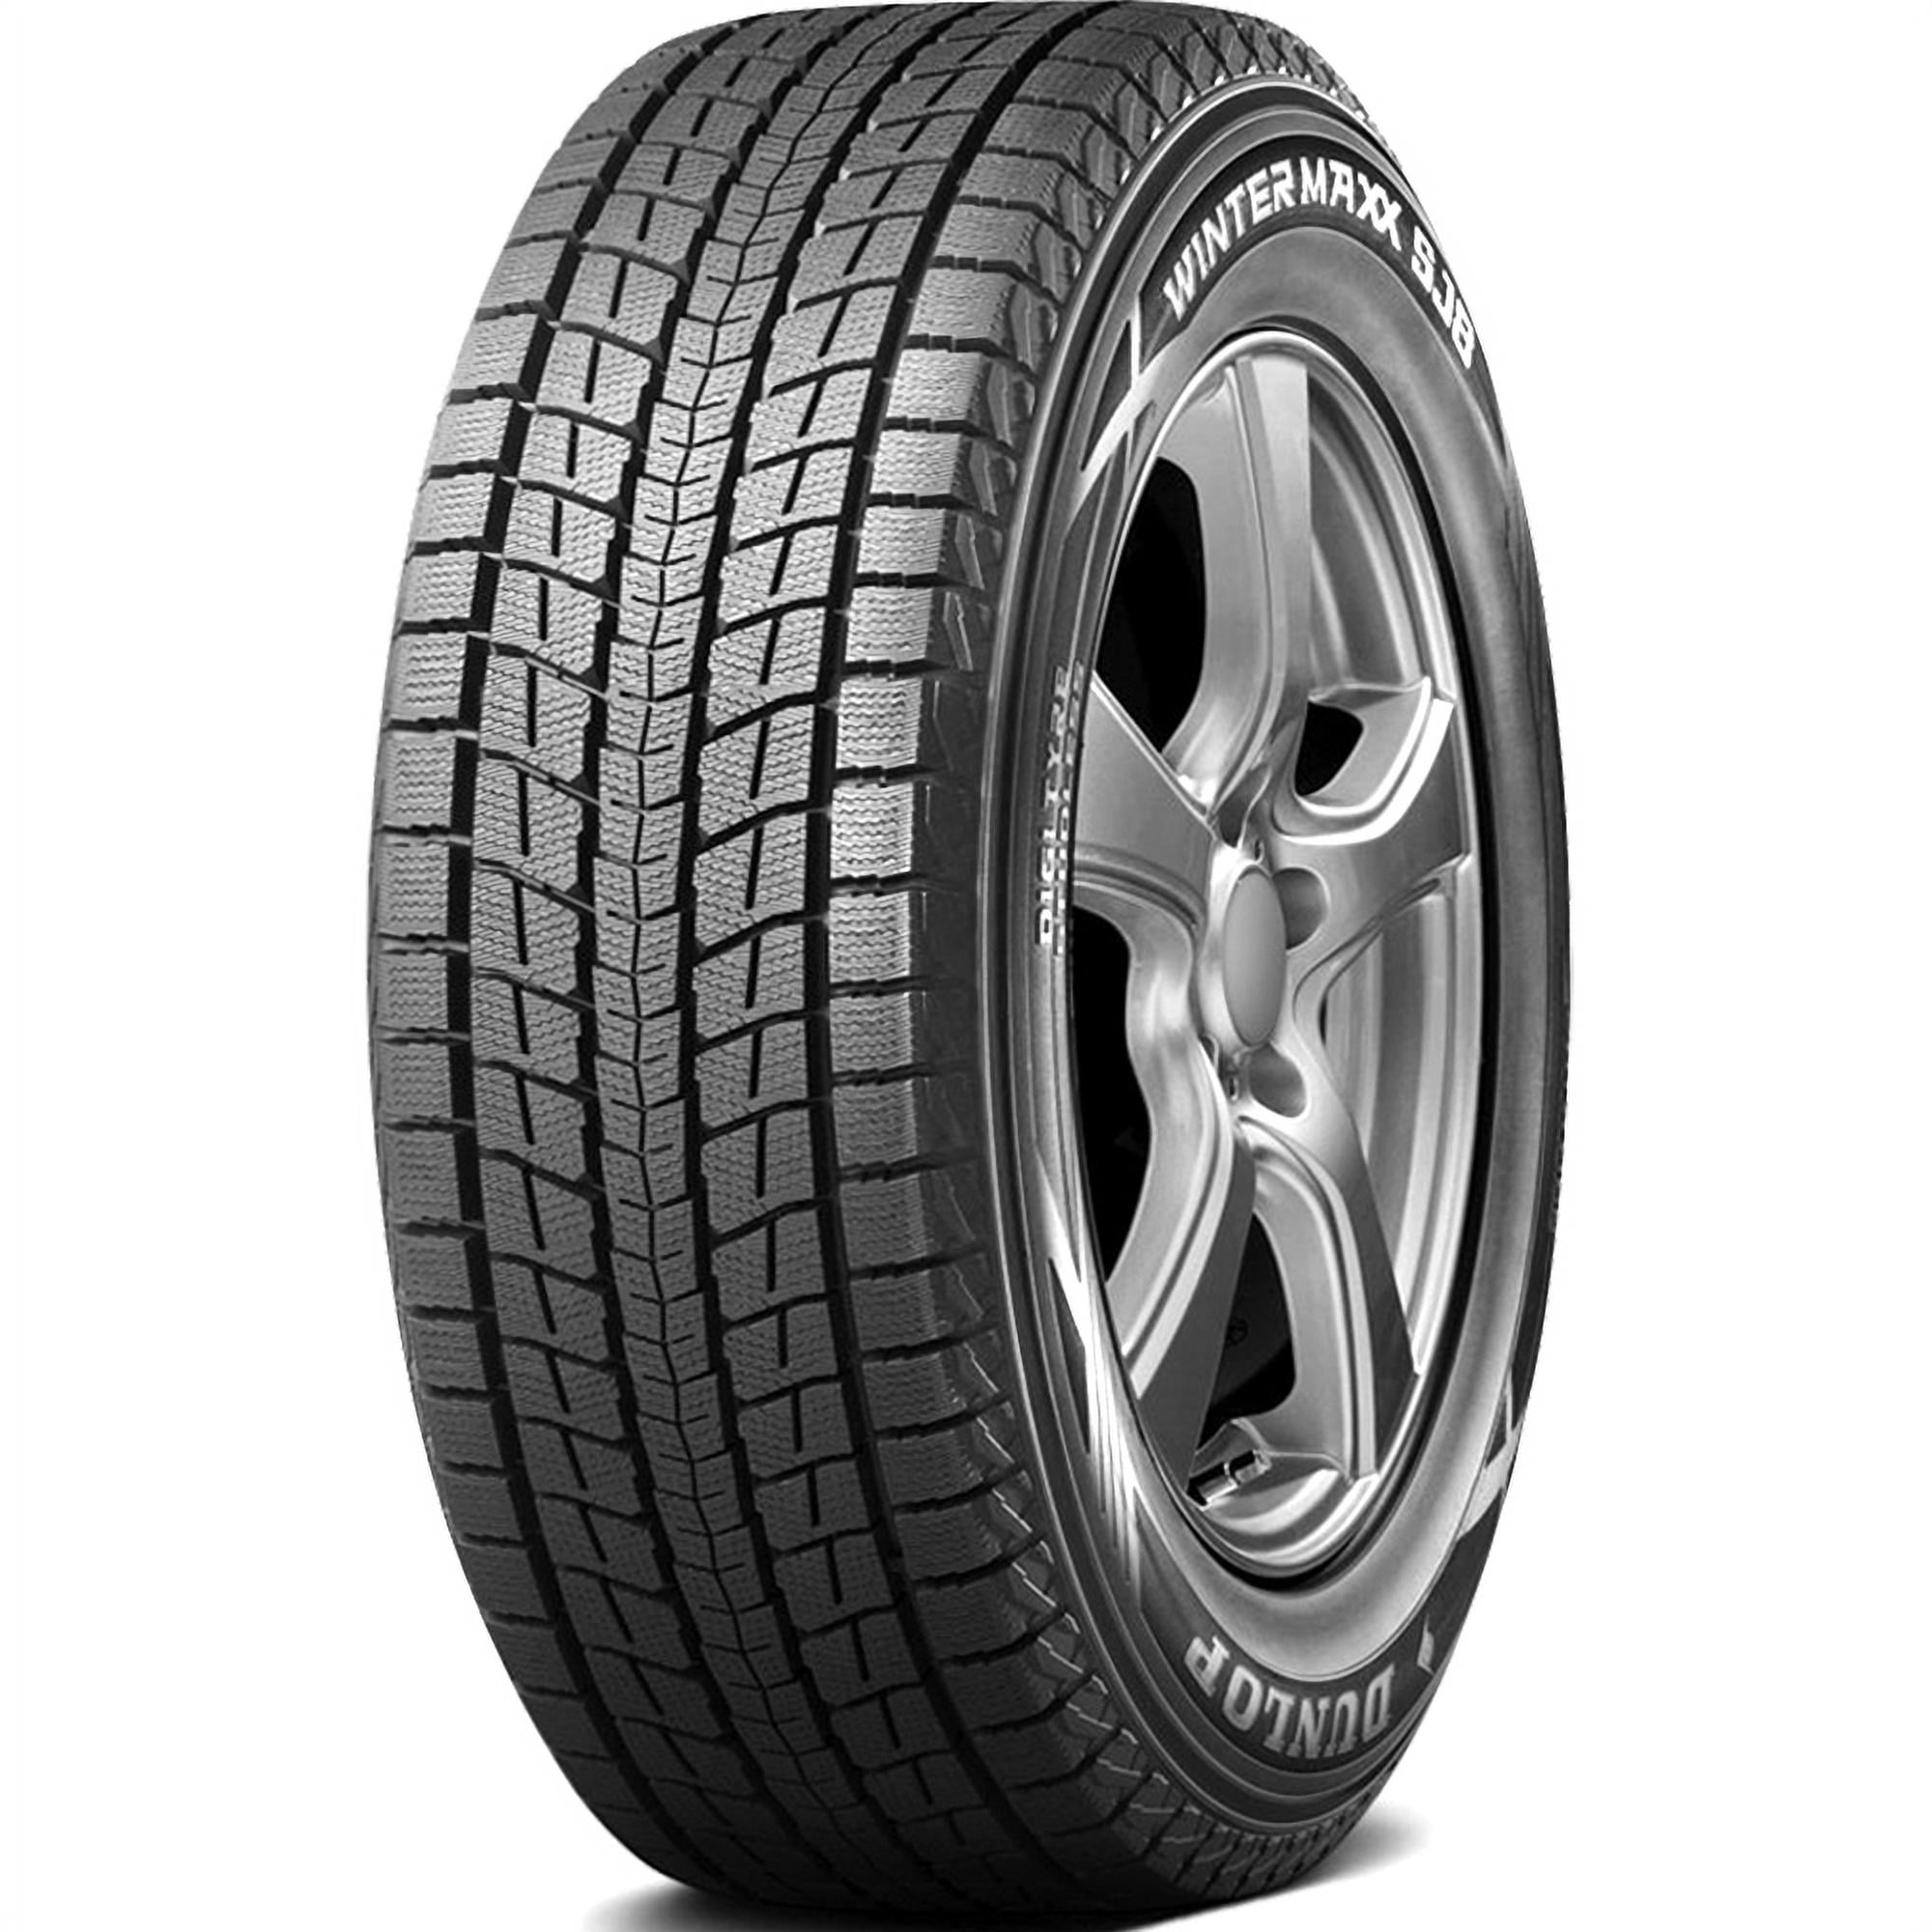 Dunlop Winter Maxx SJ8 265/60R18 110R (Studless) Snow Tire